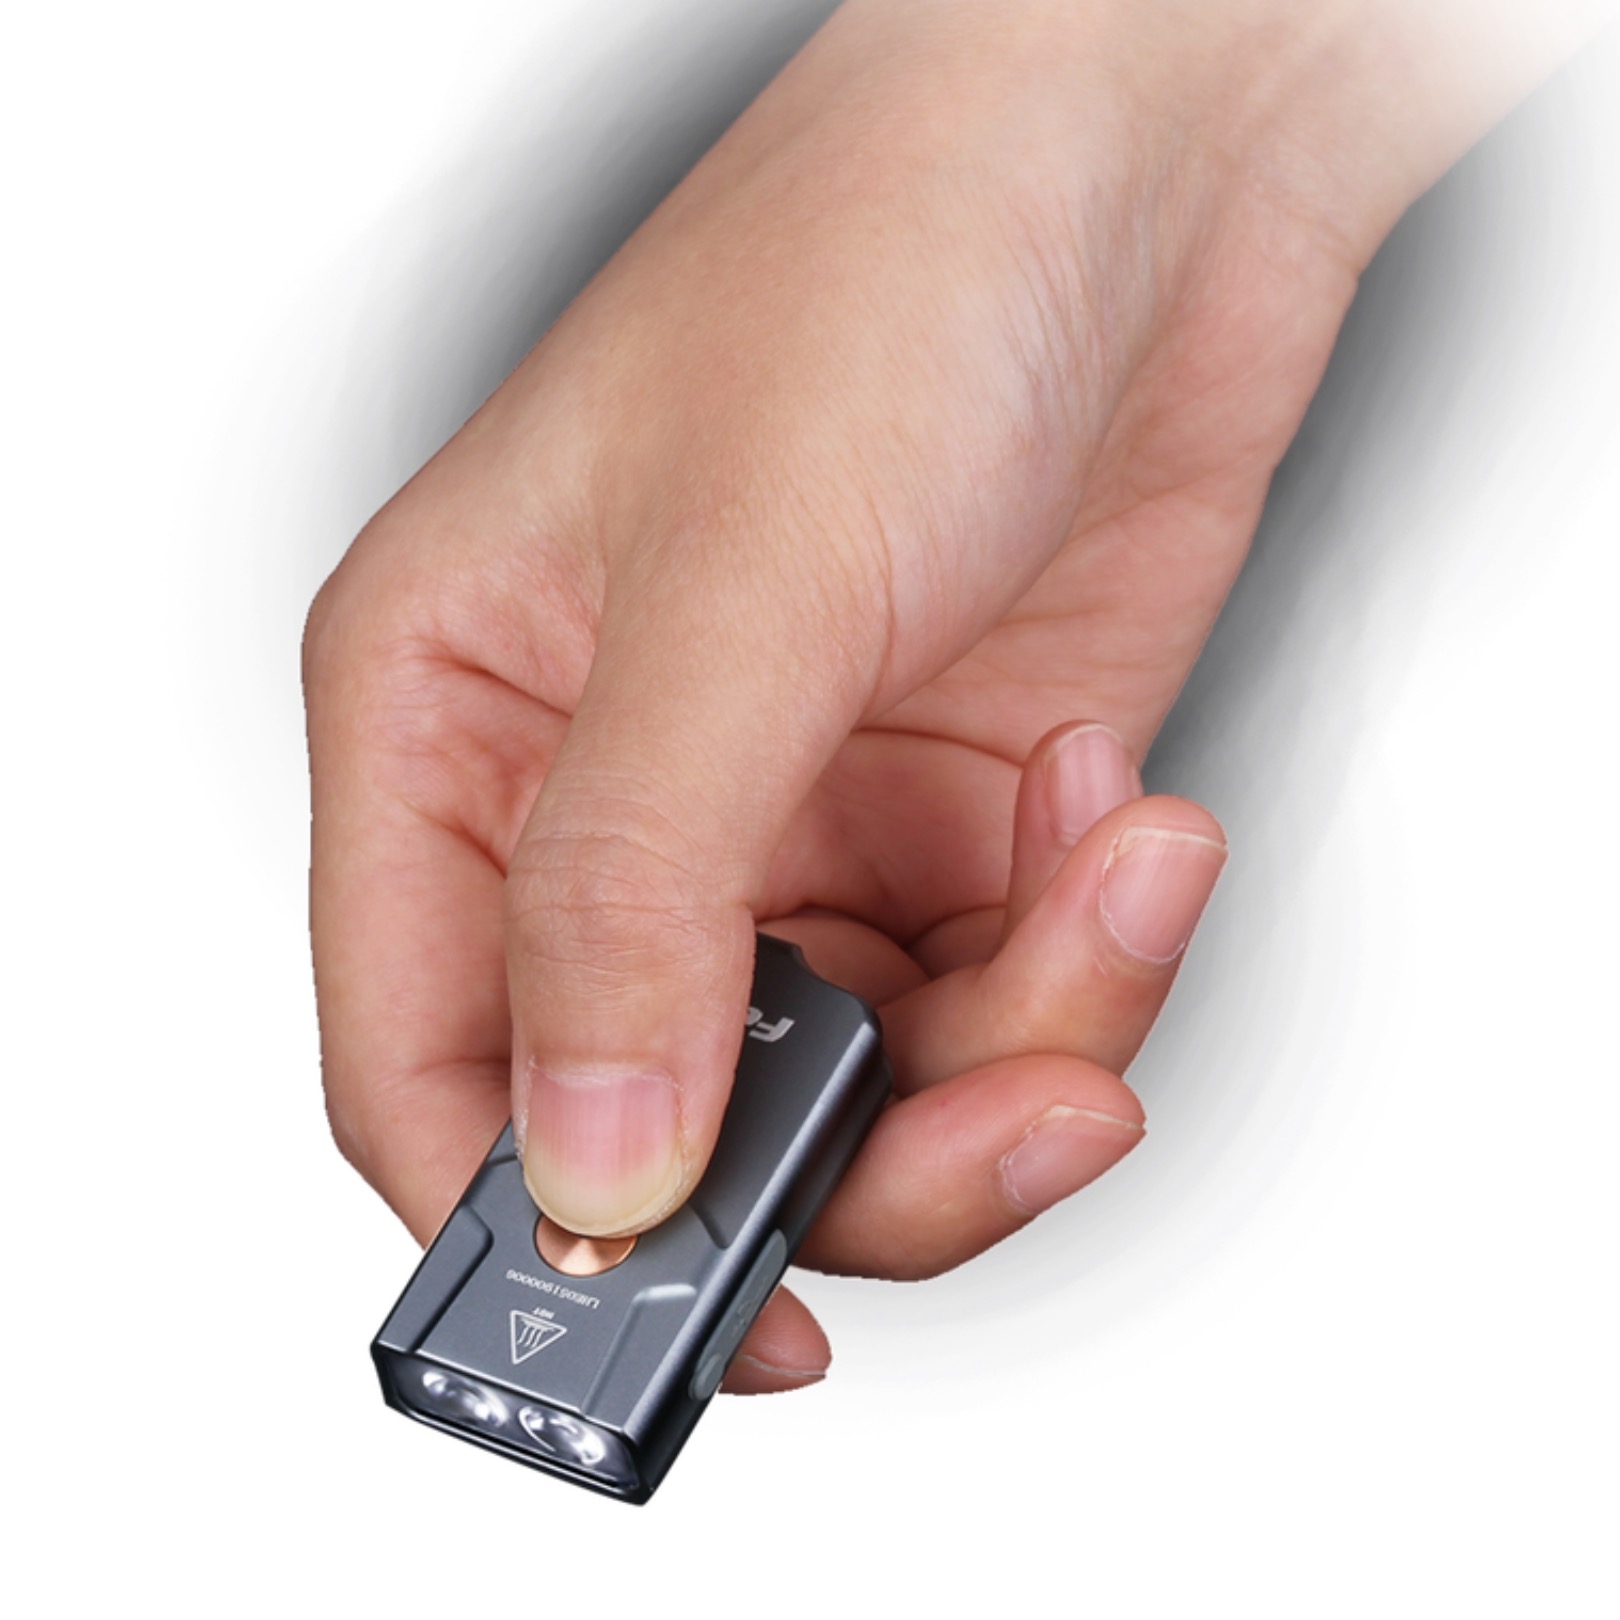 fenix-e03r-rechargeable-keychain-flashlight-in-hand